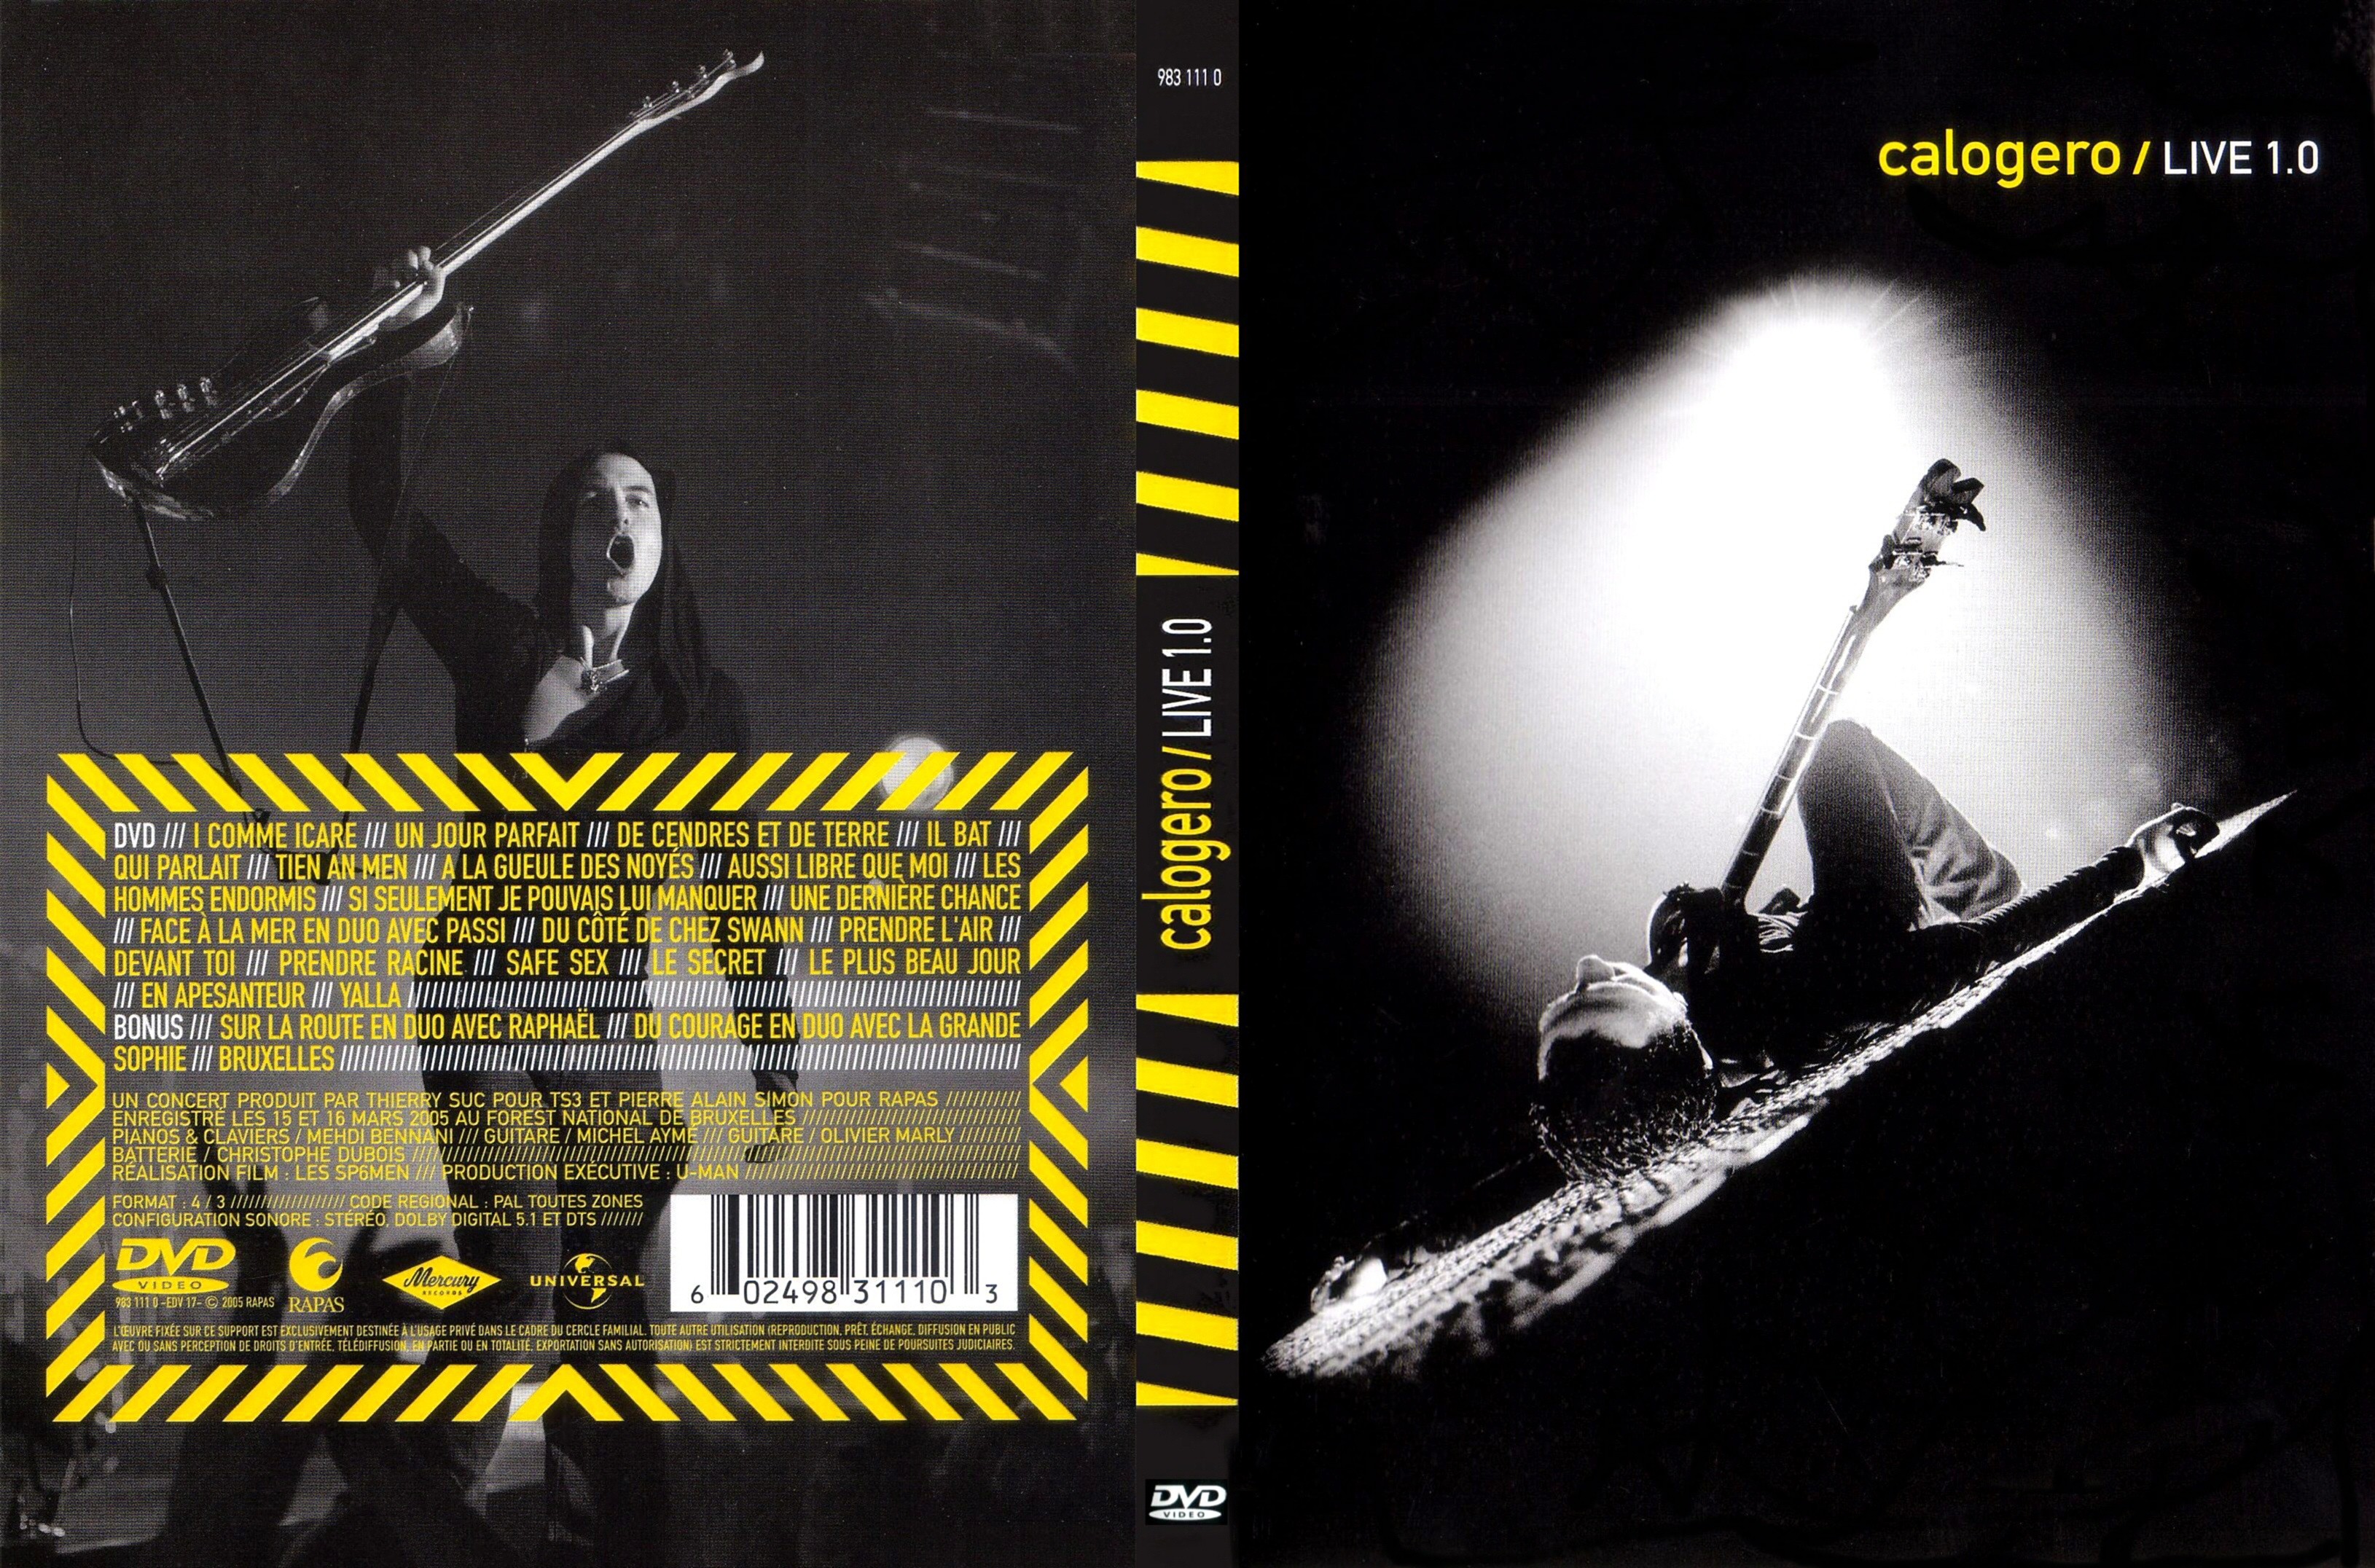 Jaquette DVD Calogero Live 1-0